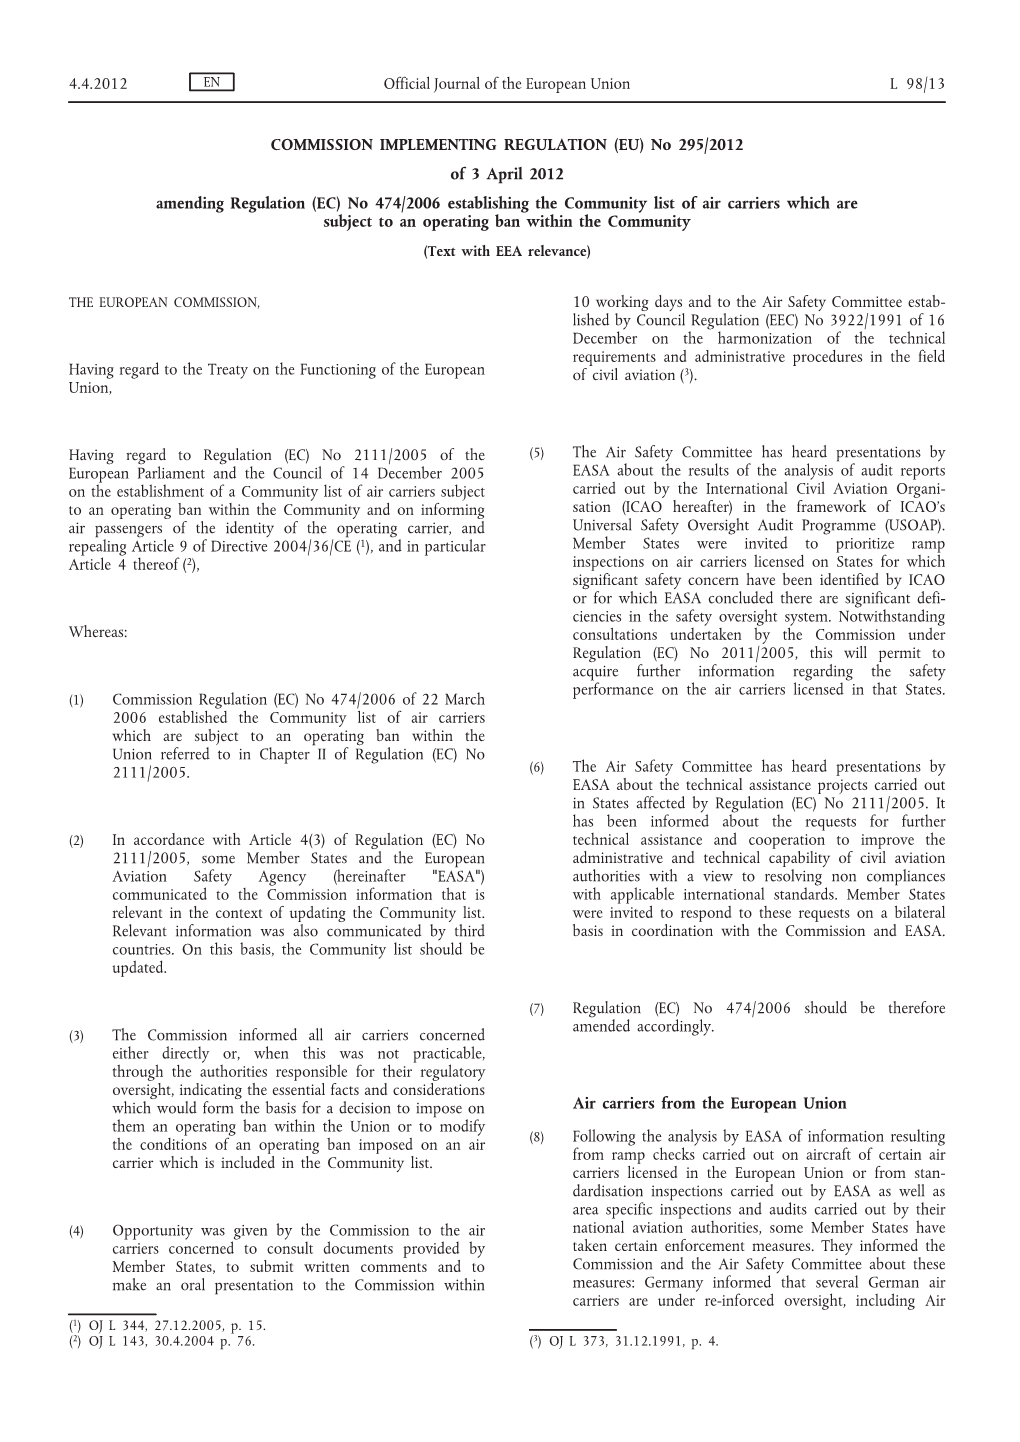 No 295/2012 of 3 April 2012 Amending Regulation